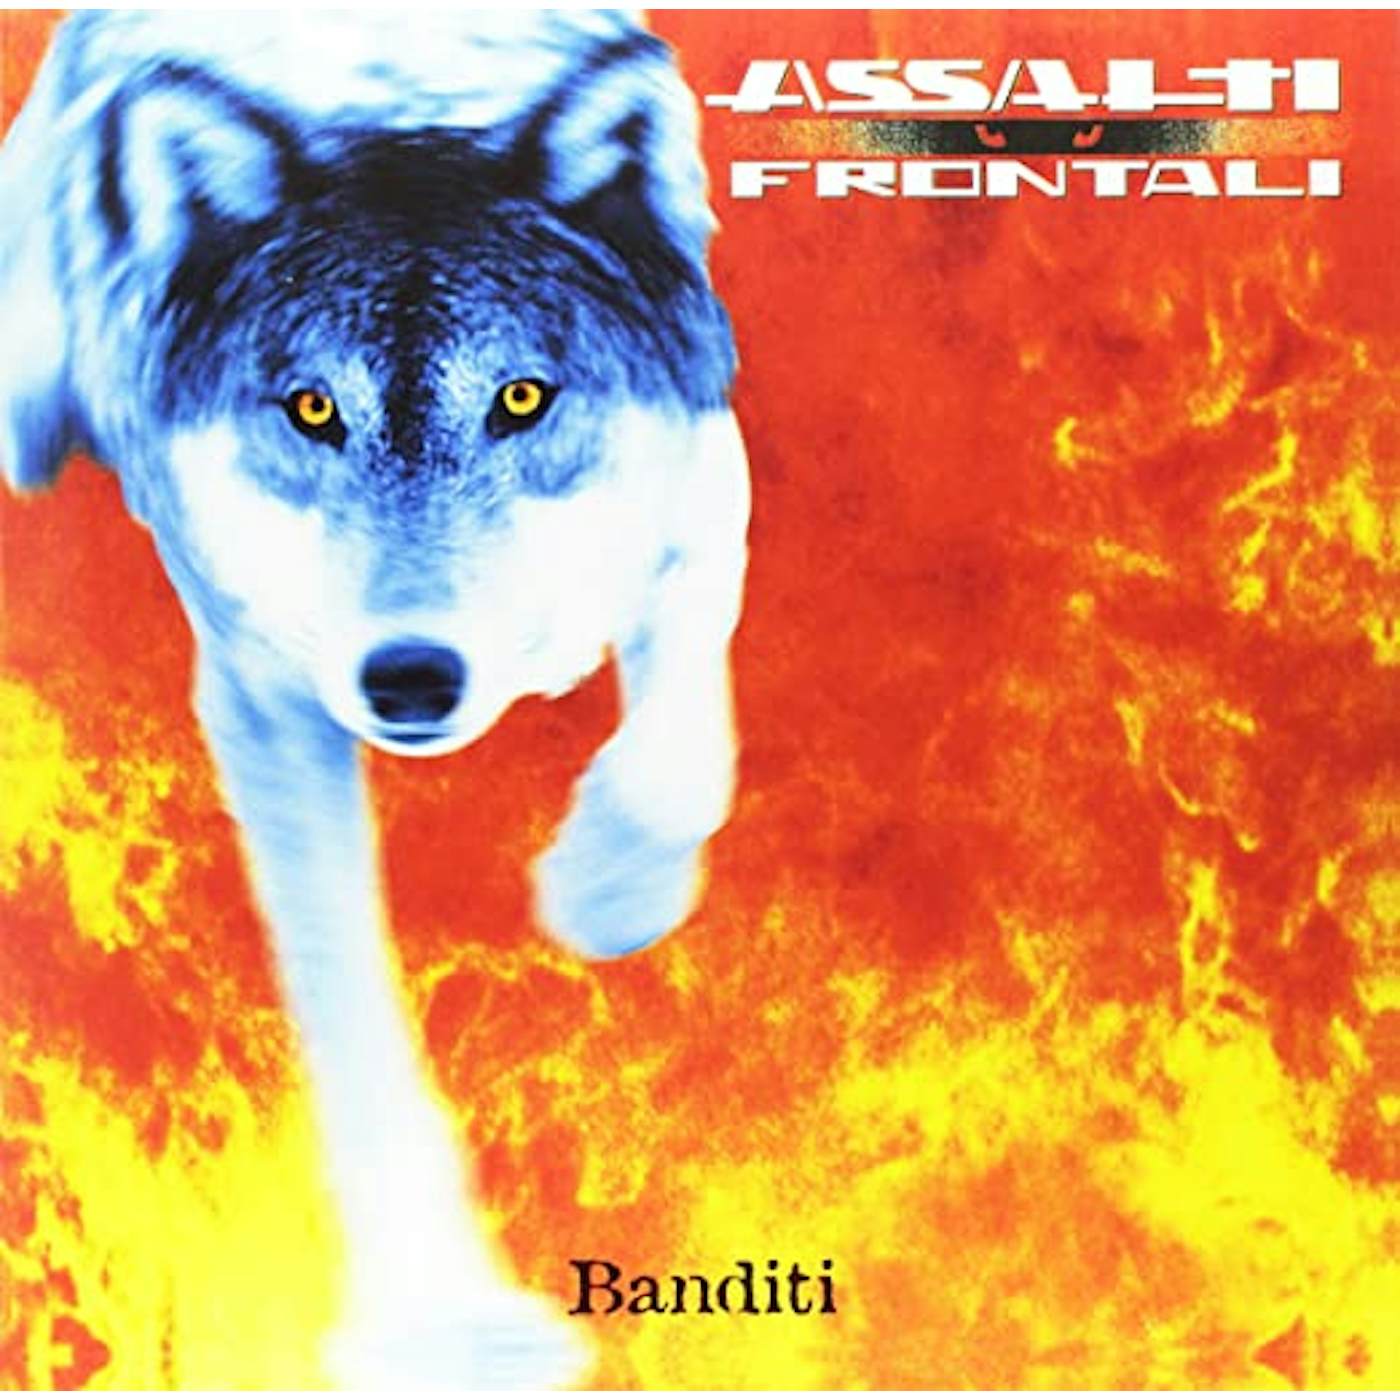 Assalti Frontali Banditi Vinyl Record